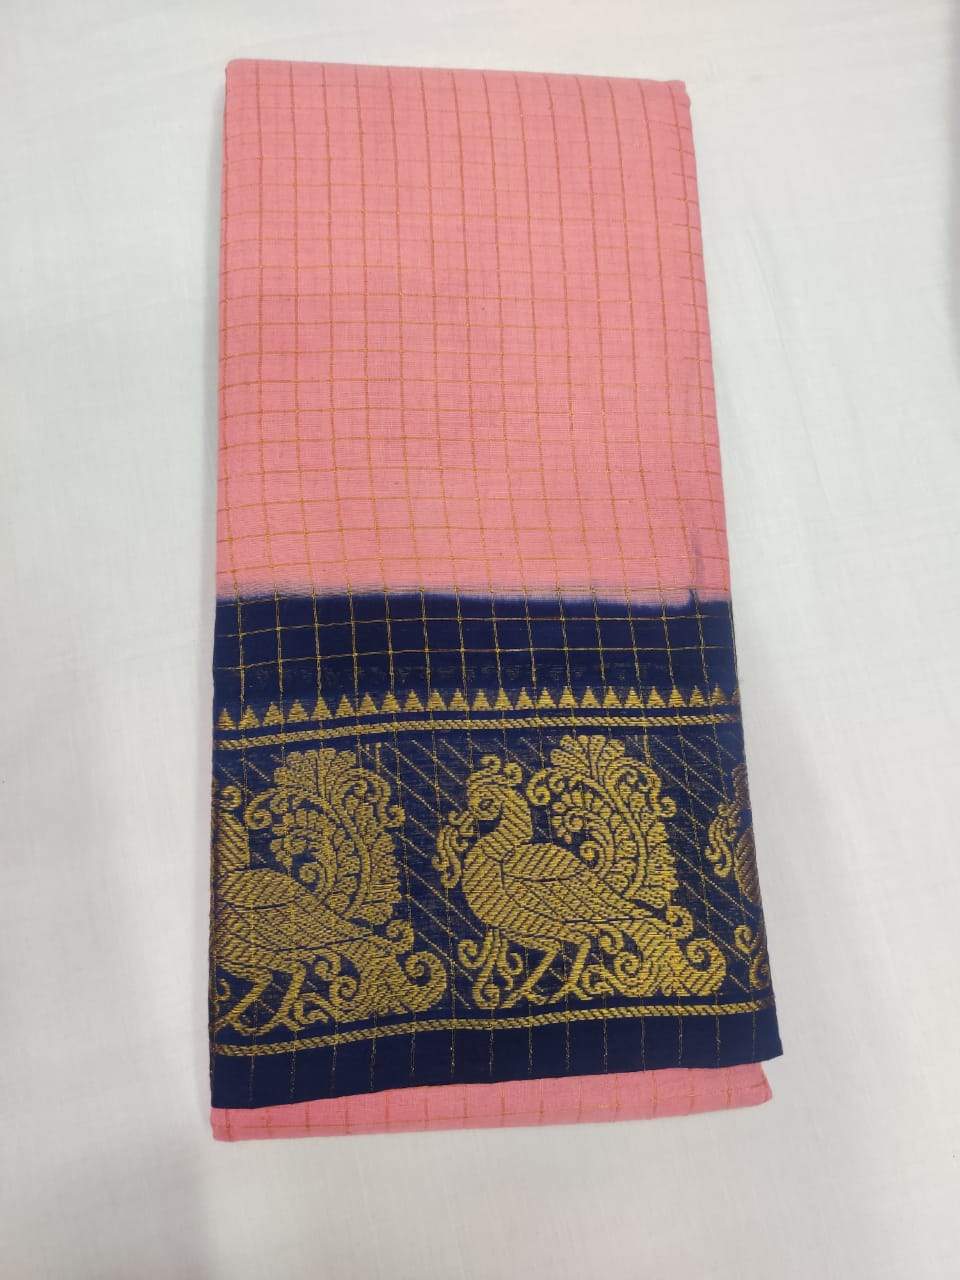 Rose Pink with Blue-Madurai Sungudi Sarees - Double side Jari Border